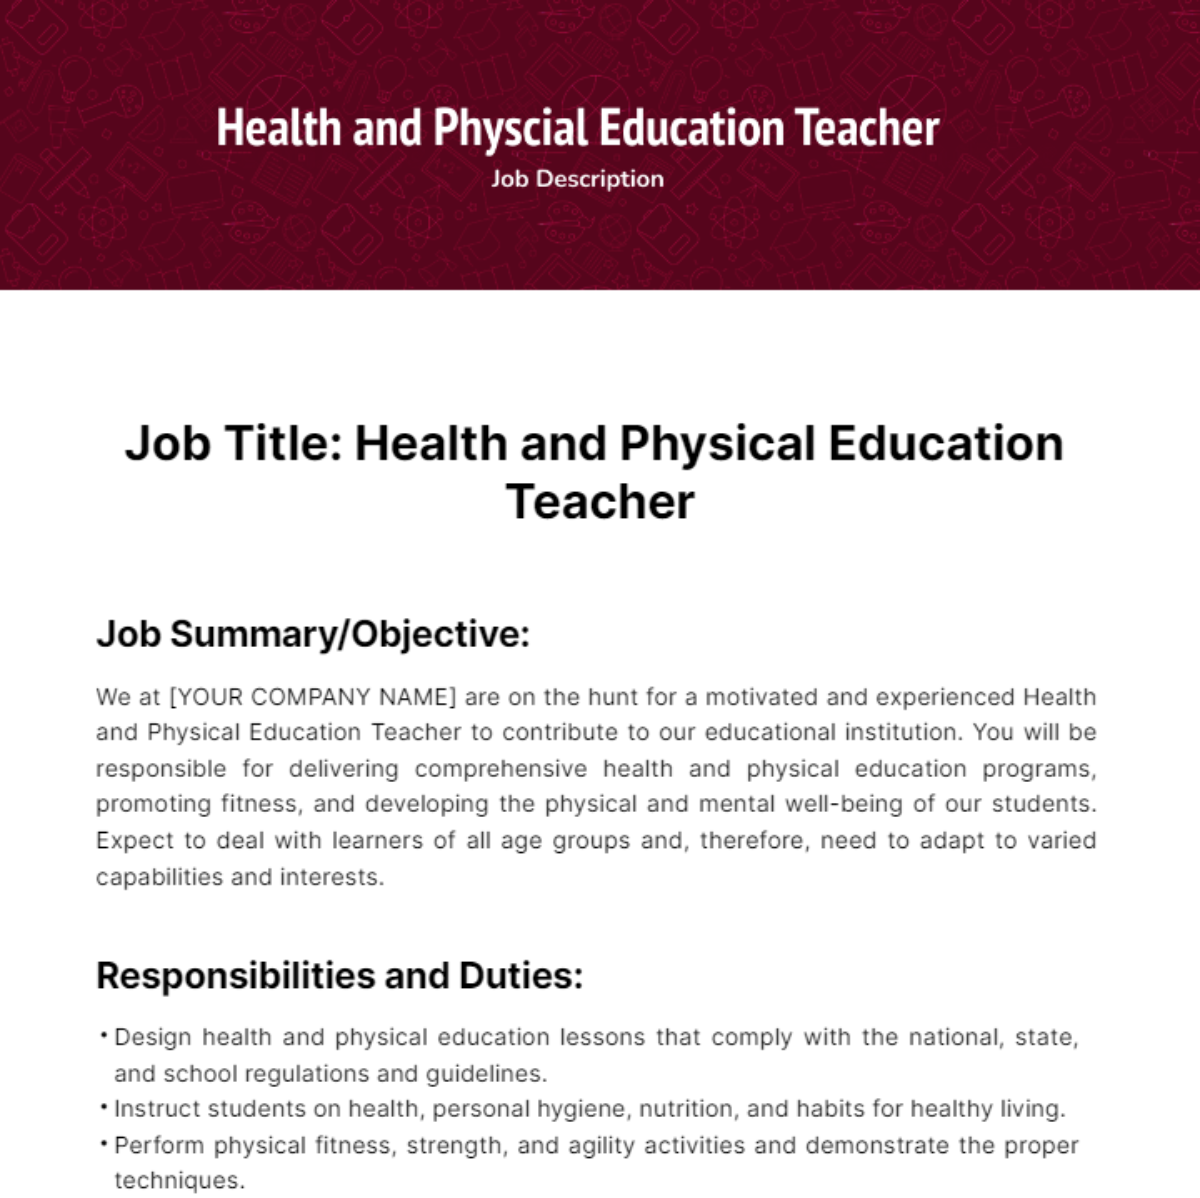 Free Health and Physical Education Teacher Job Description Template